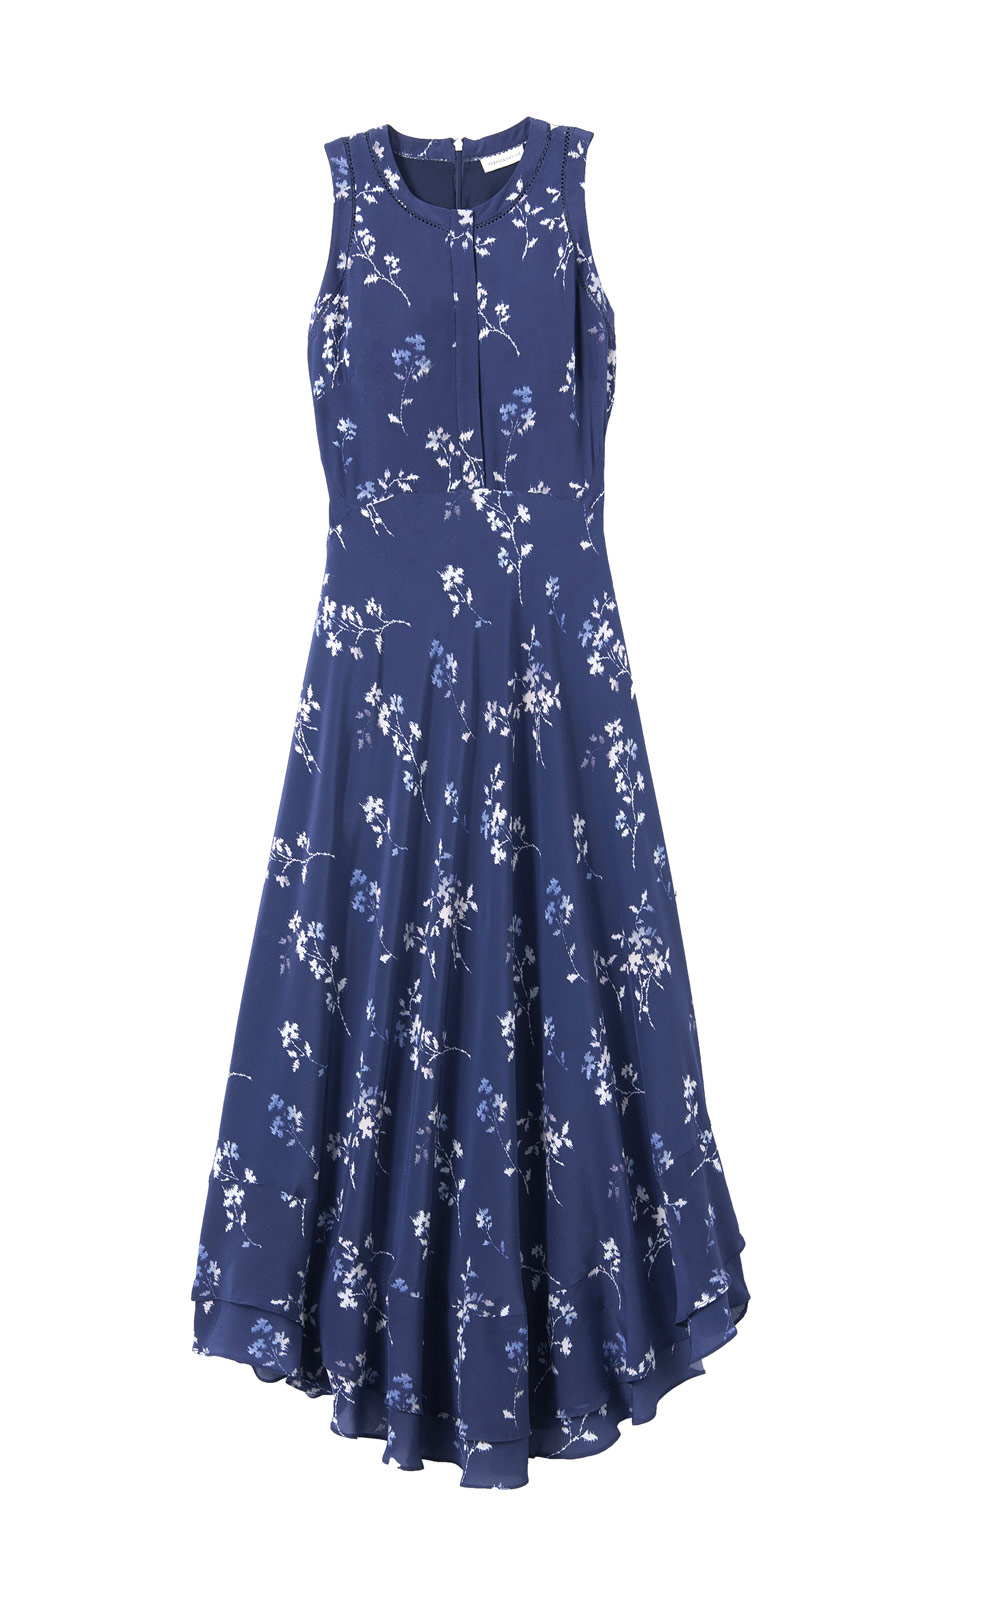 Lyst - Rebecca Taylor Wisteria Print Dress in Blue